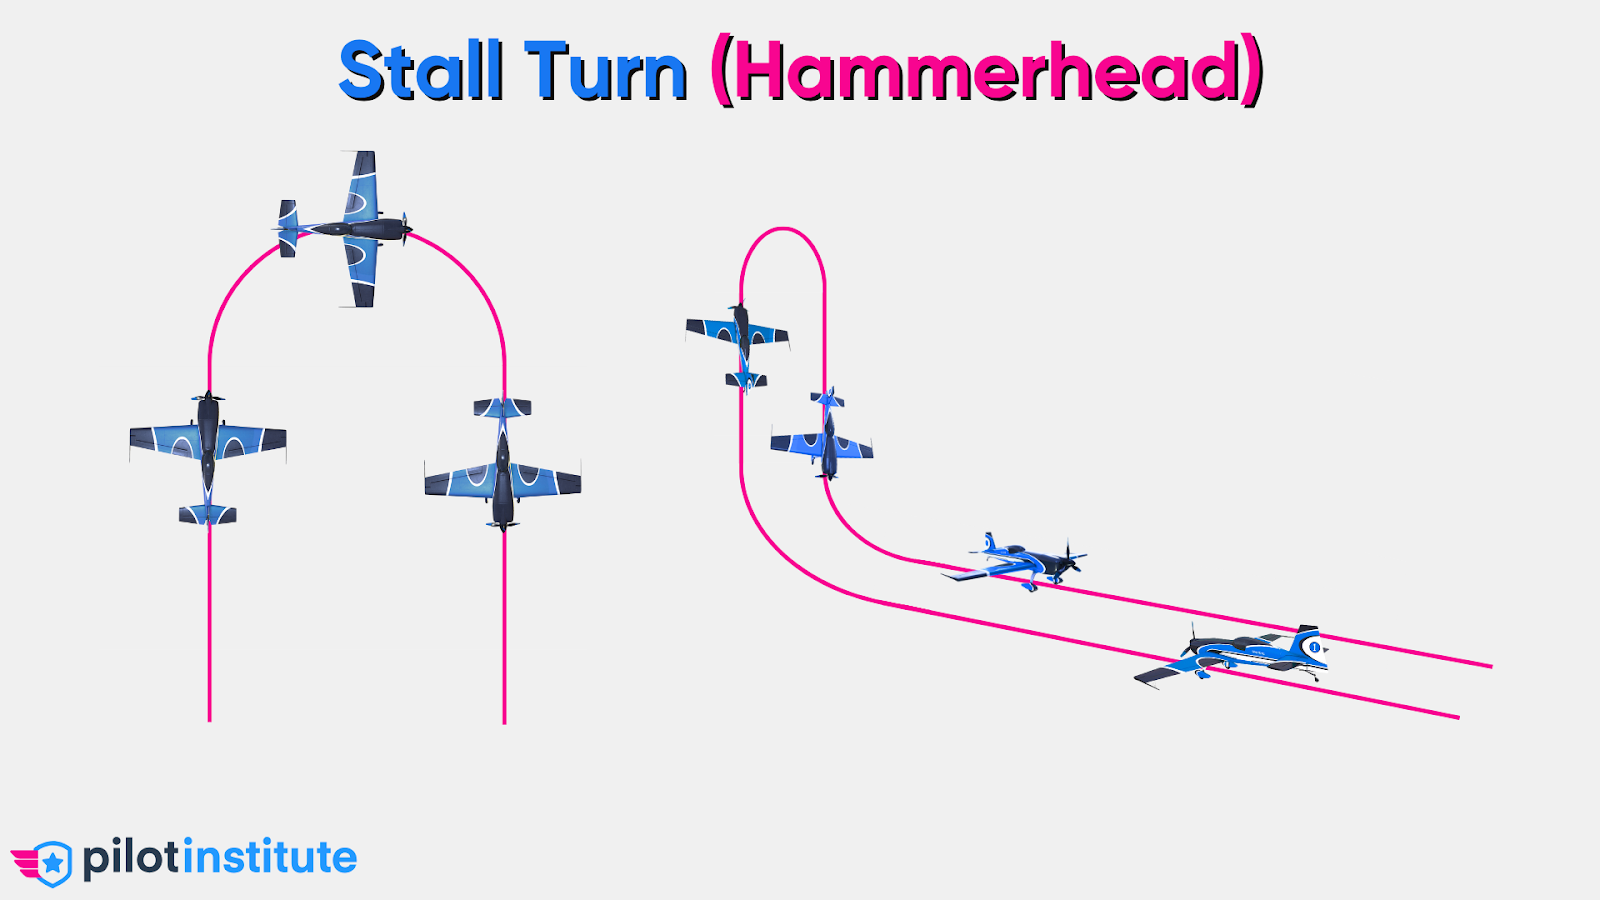 A 3D diagram of the stall turn (hammerhead) maneuver.